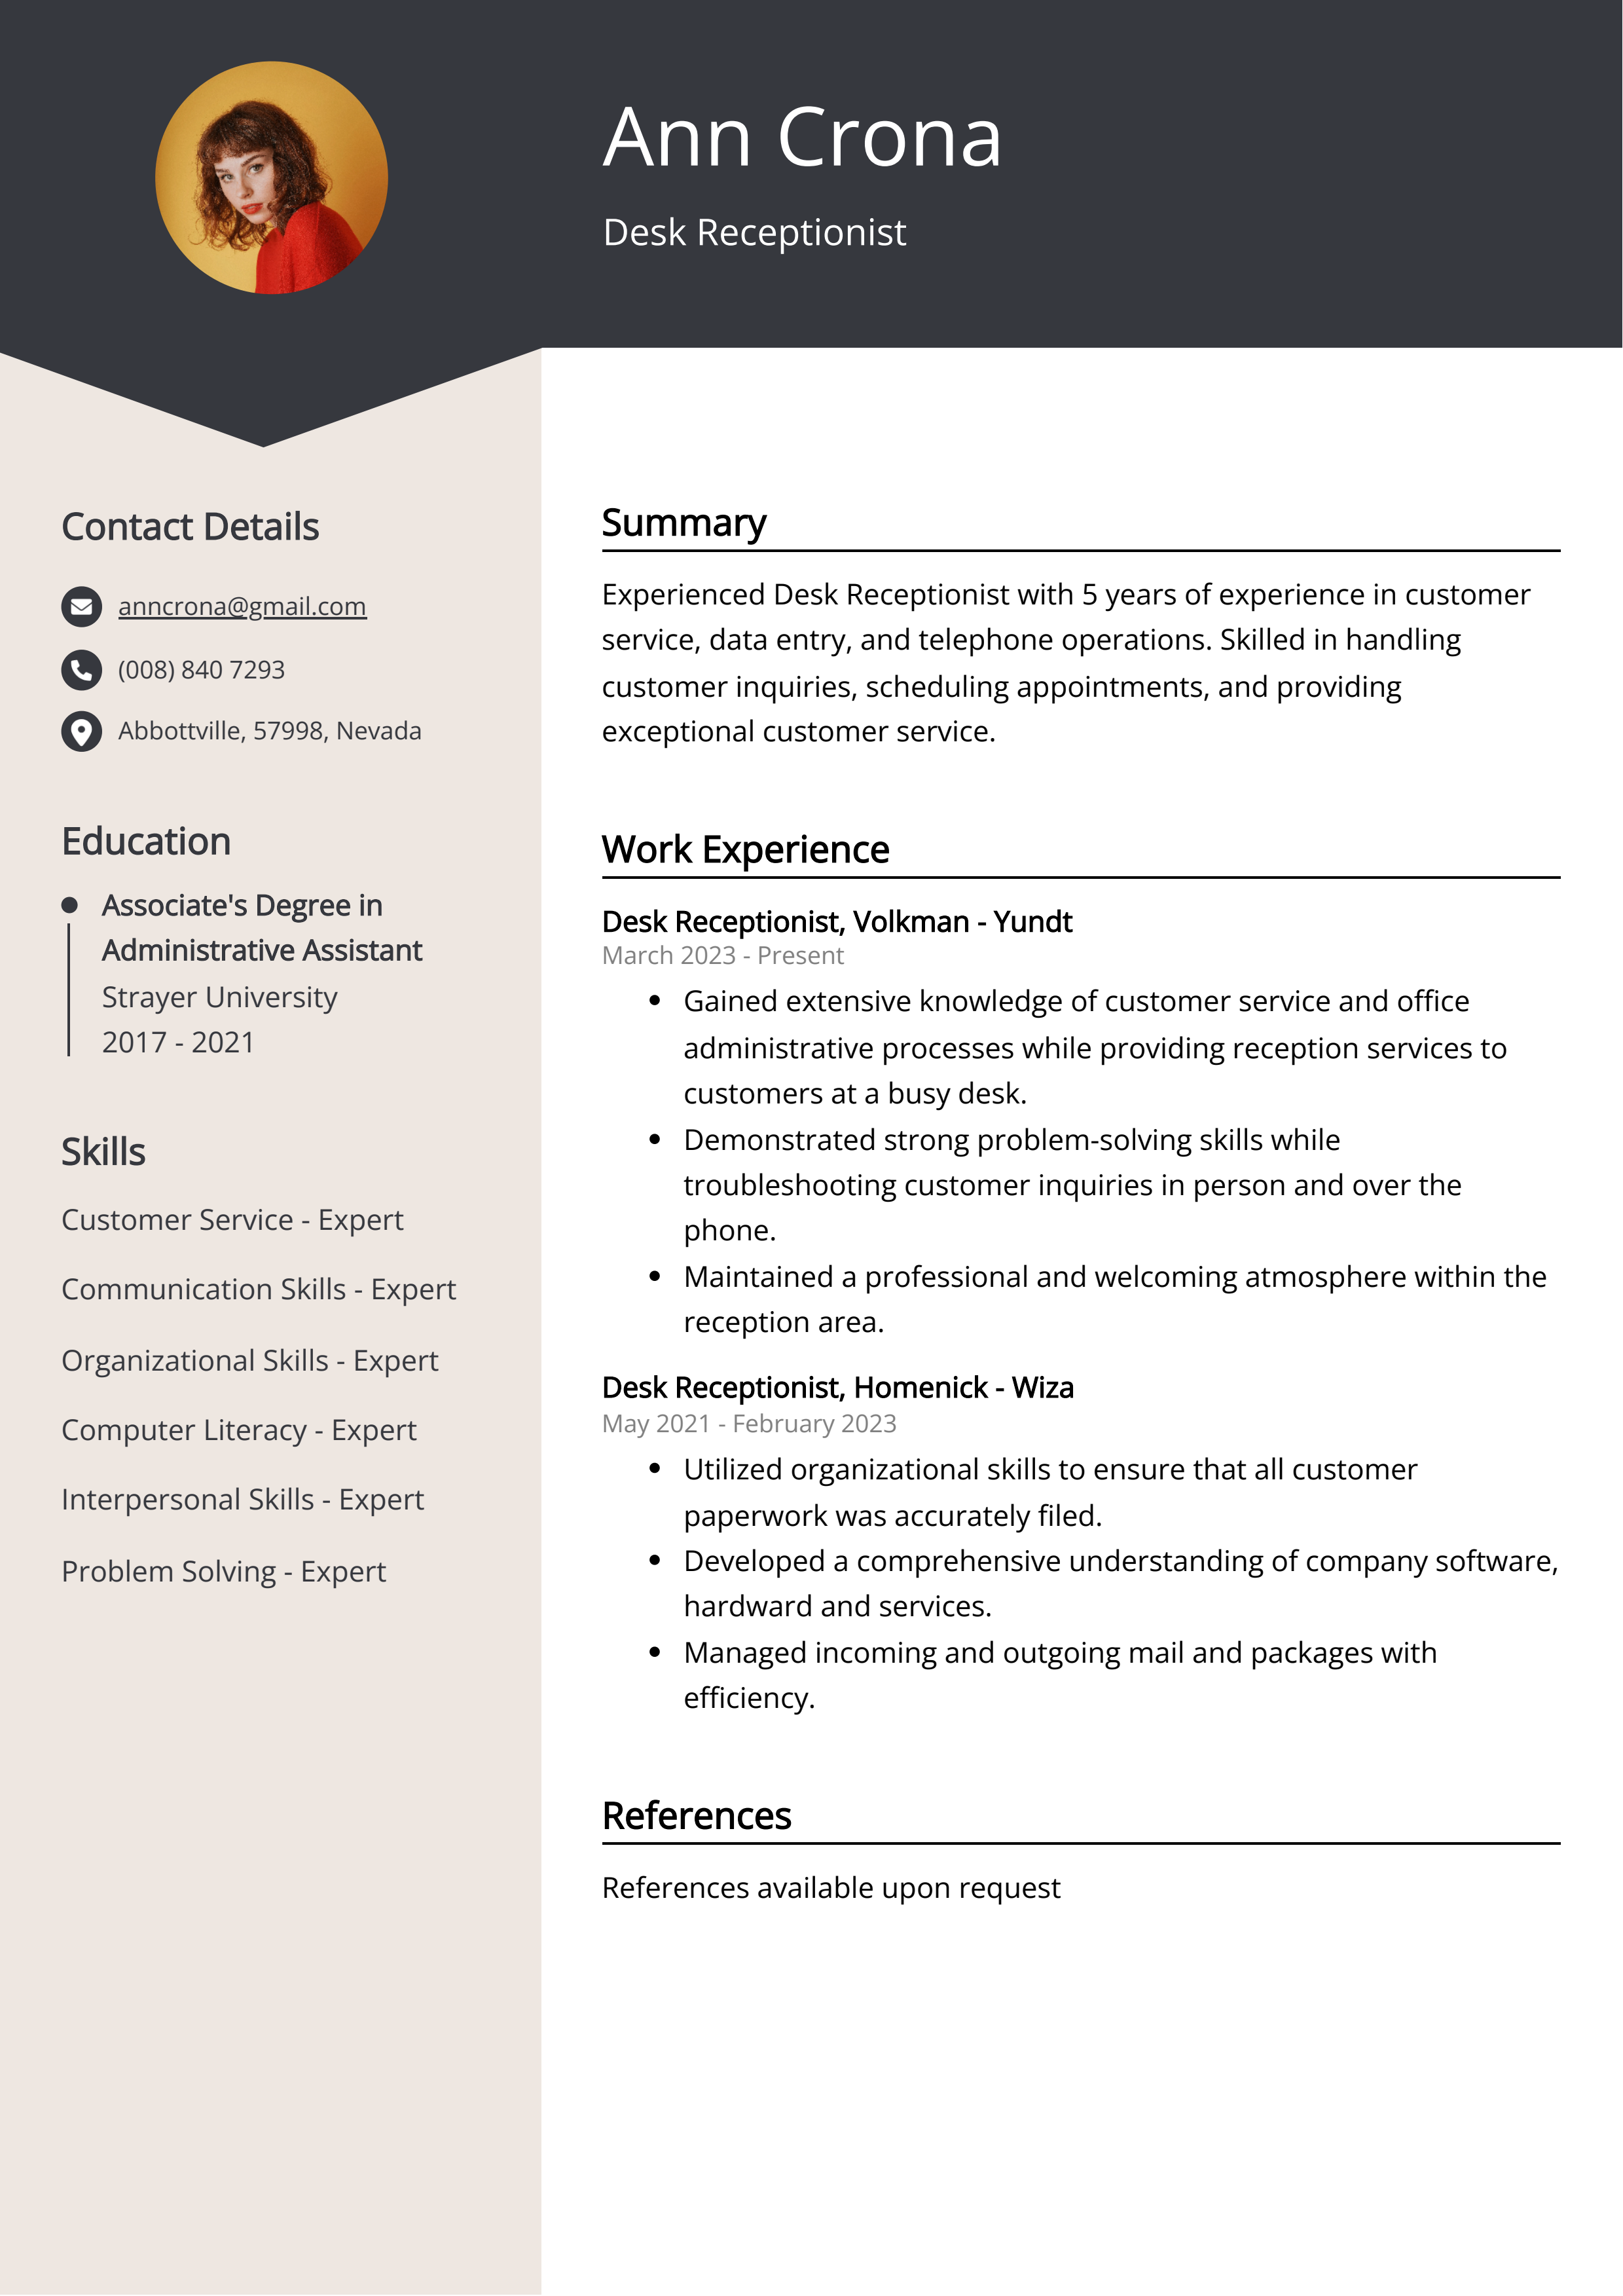 Desk Receptionist CV Example